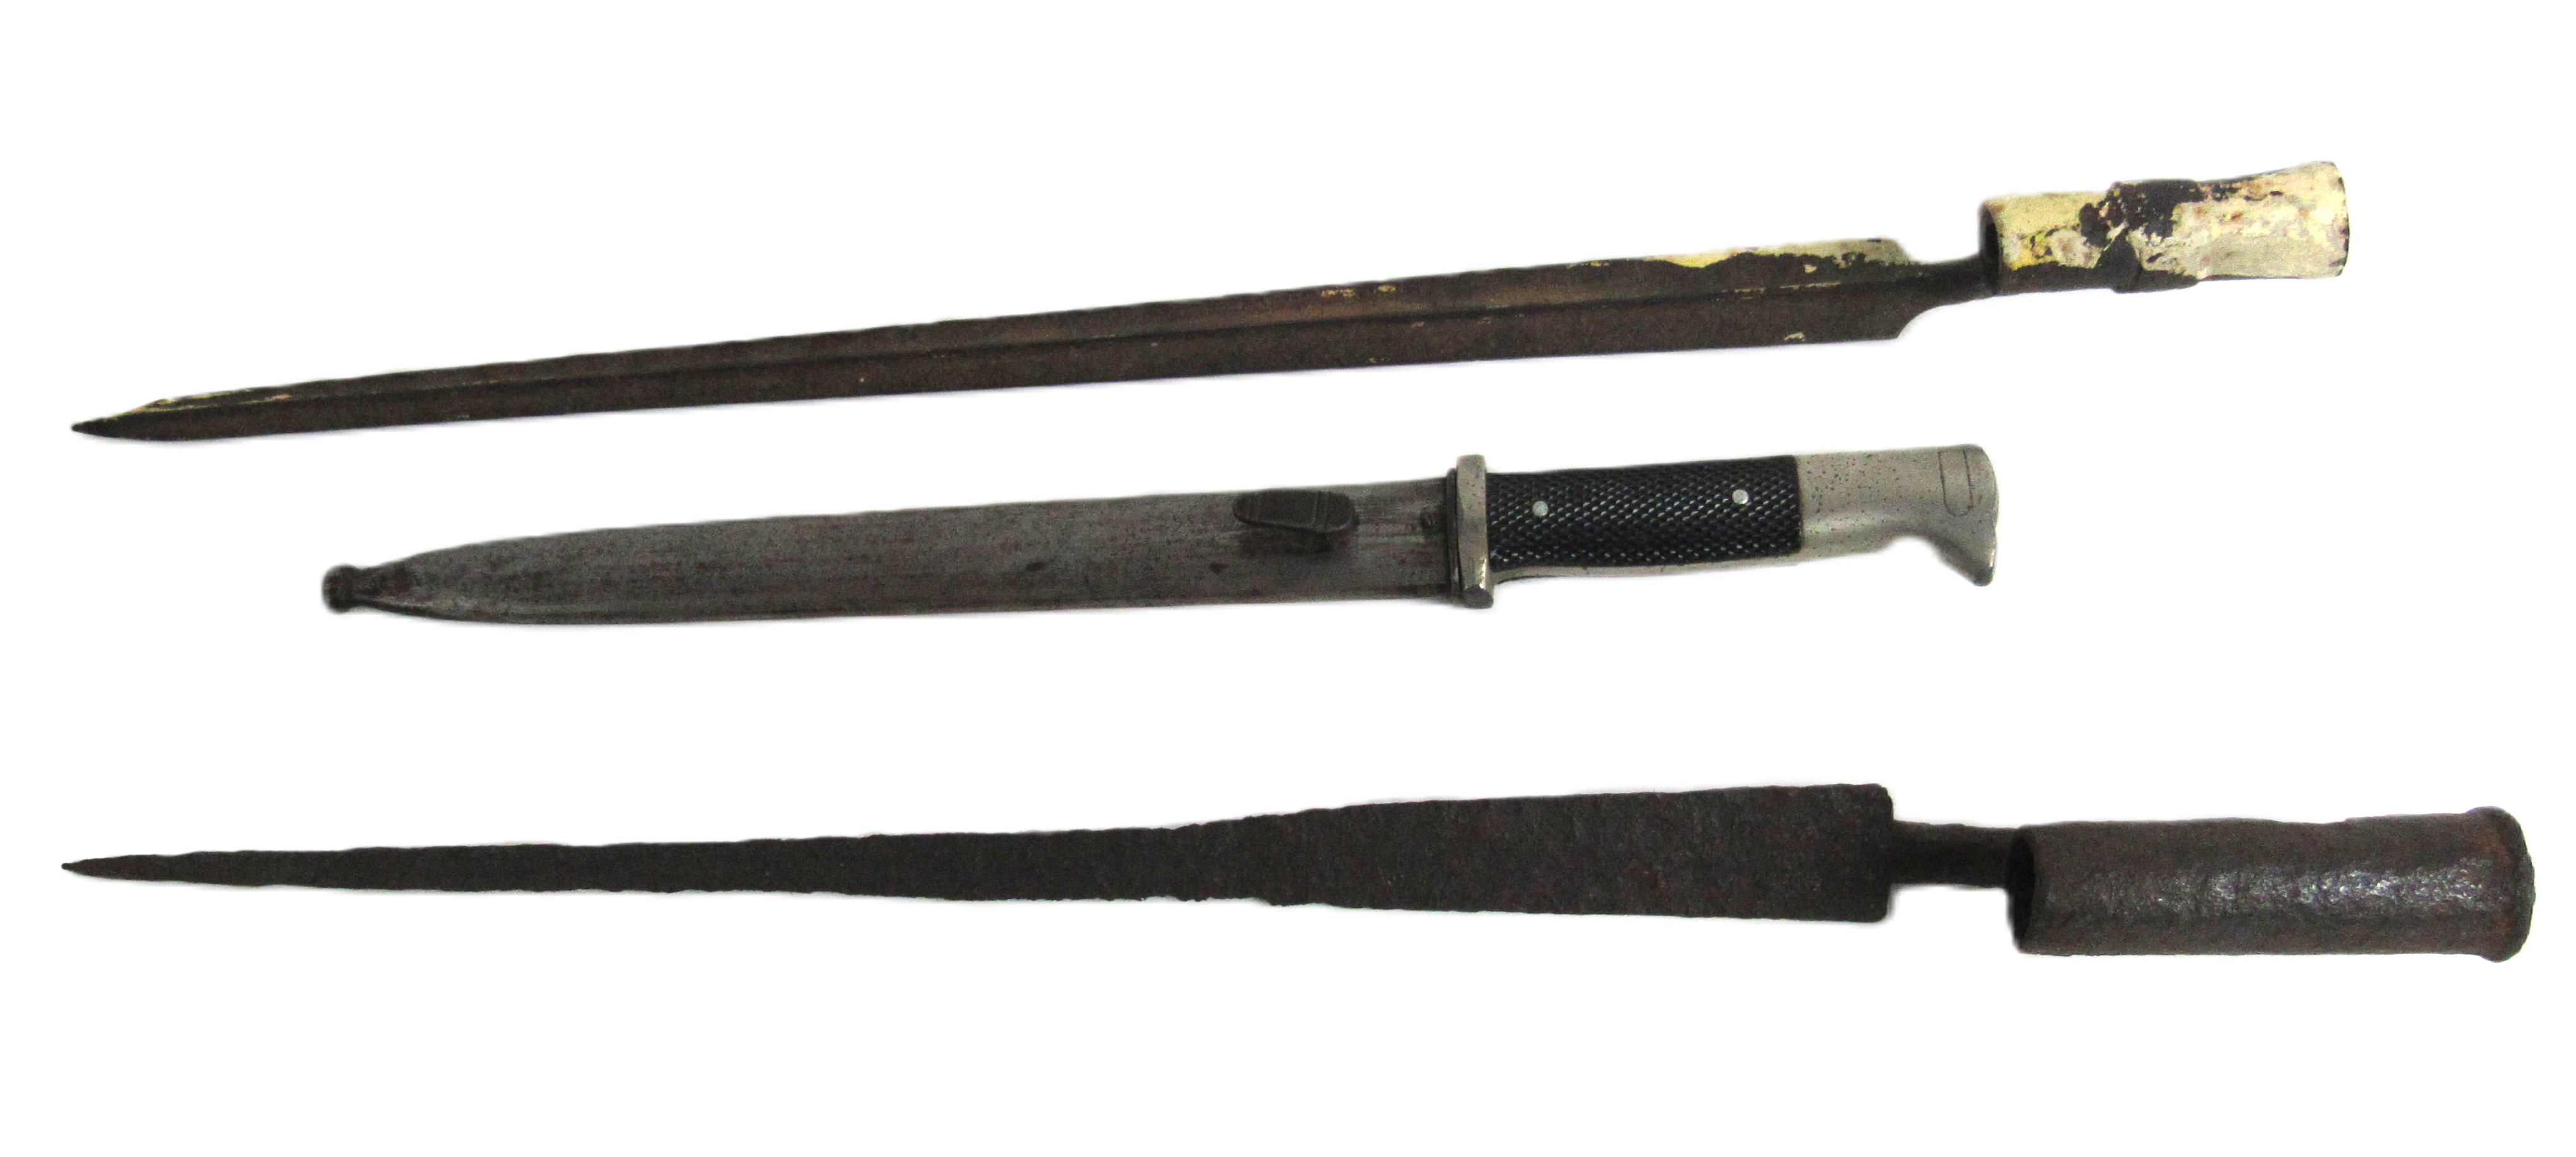 Militaria: A World War II Army issue Robert Klaas - Solingen steel blade Bayonet, stamped, with